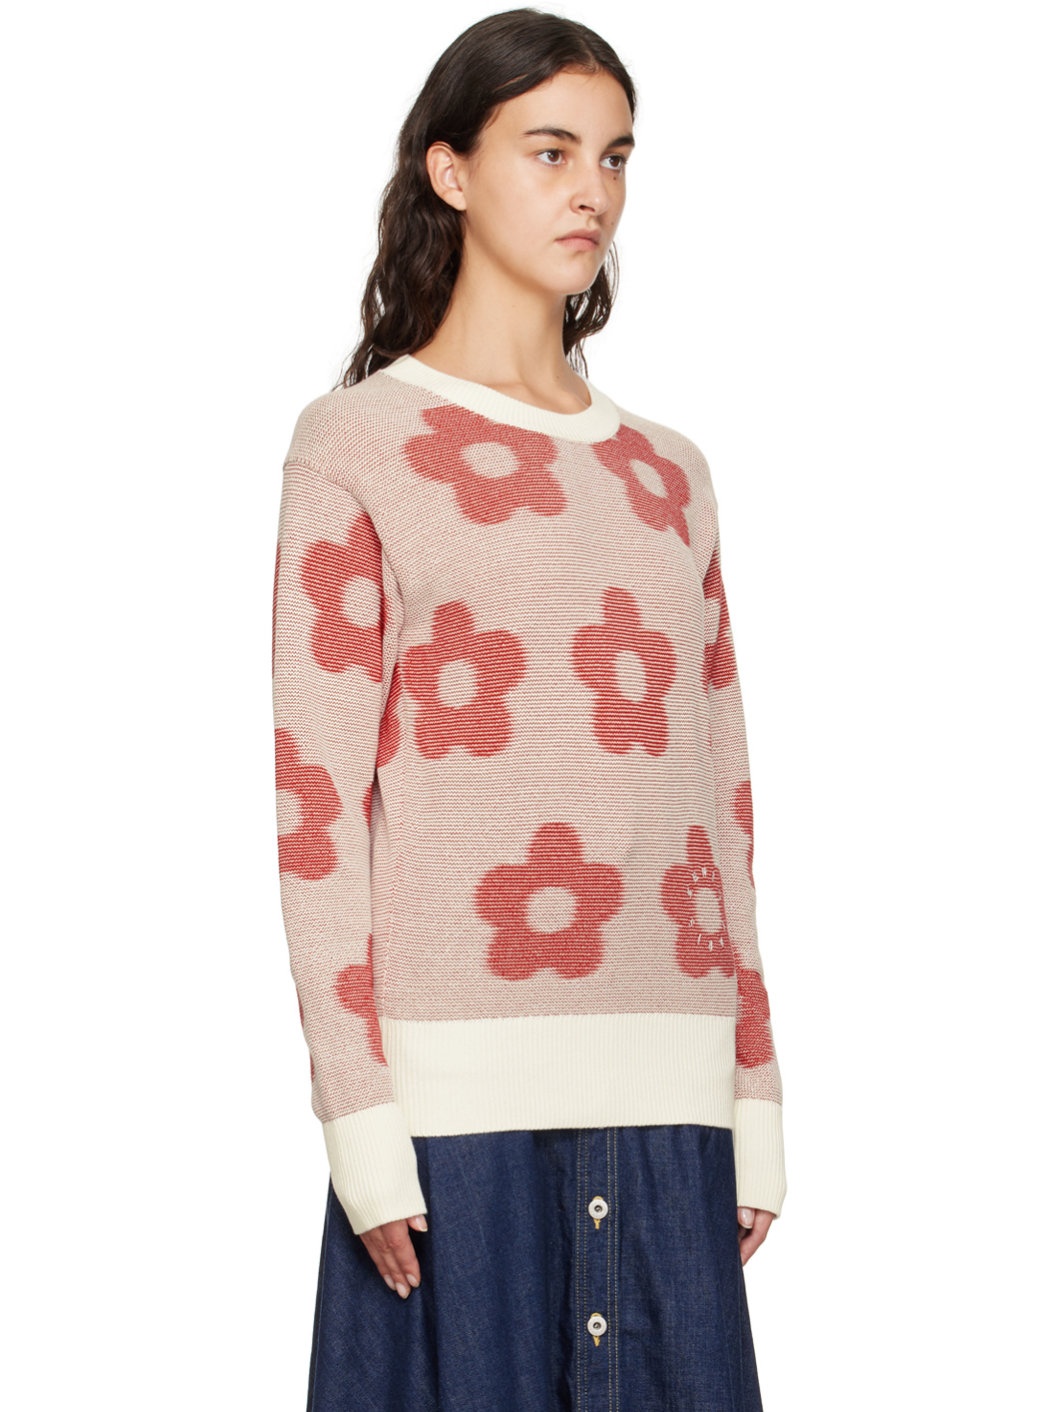 Red & White Kenzo Paris Flower Spot Sweater - 2